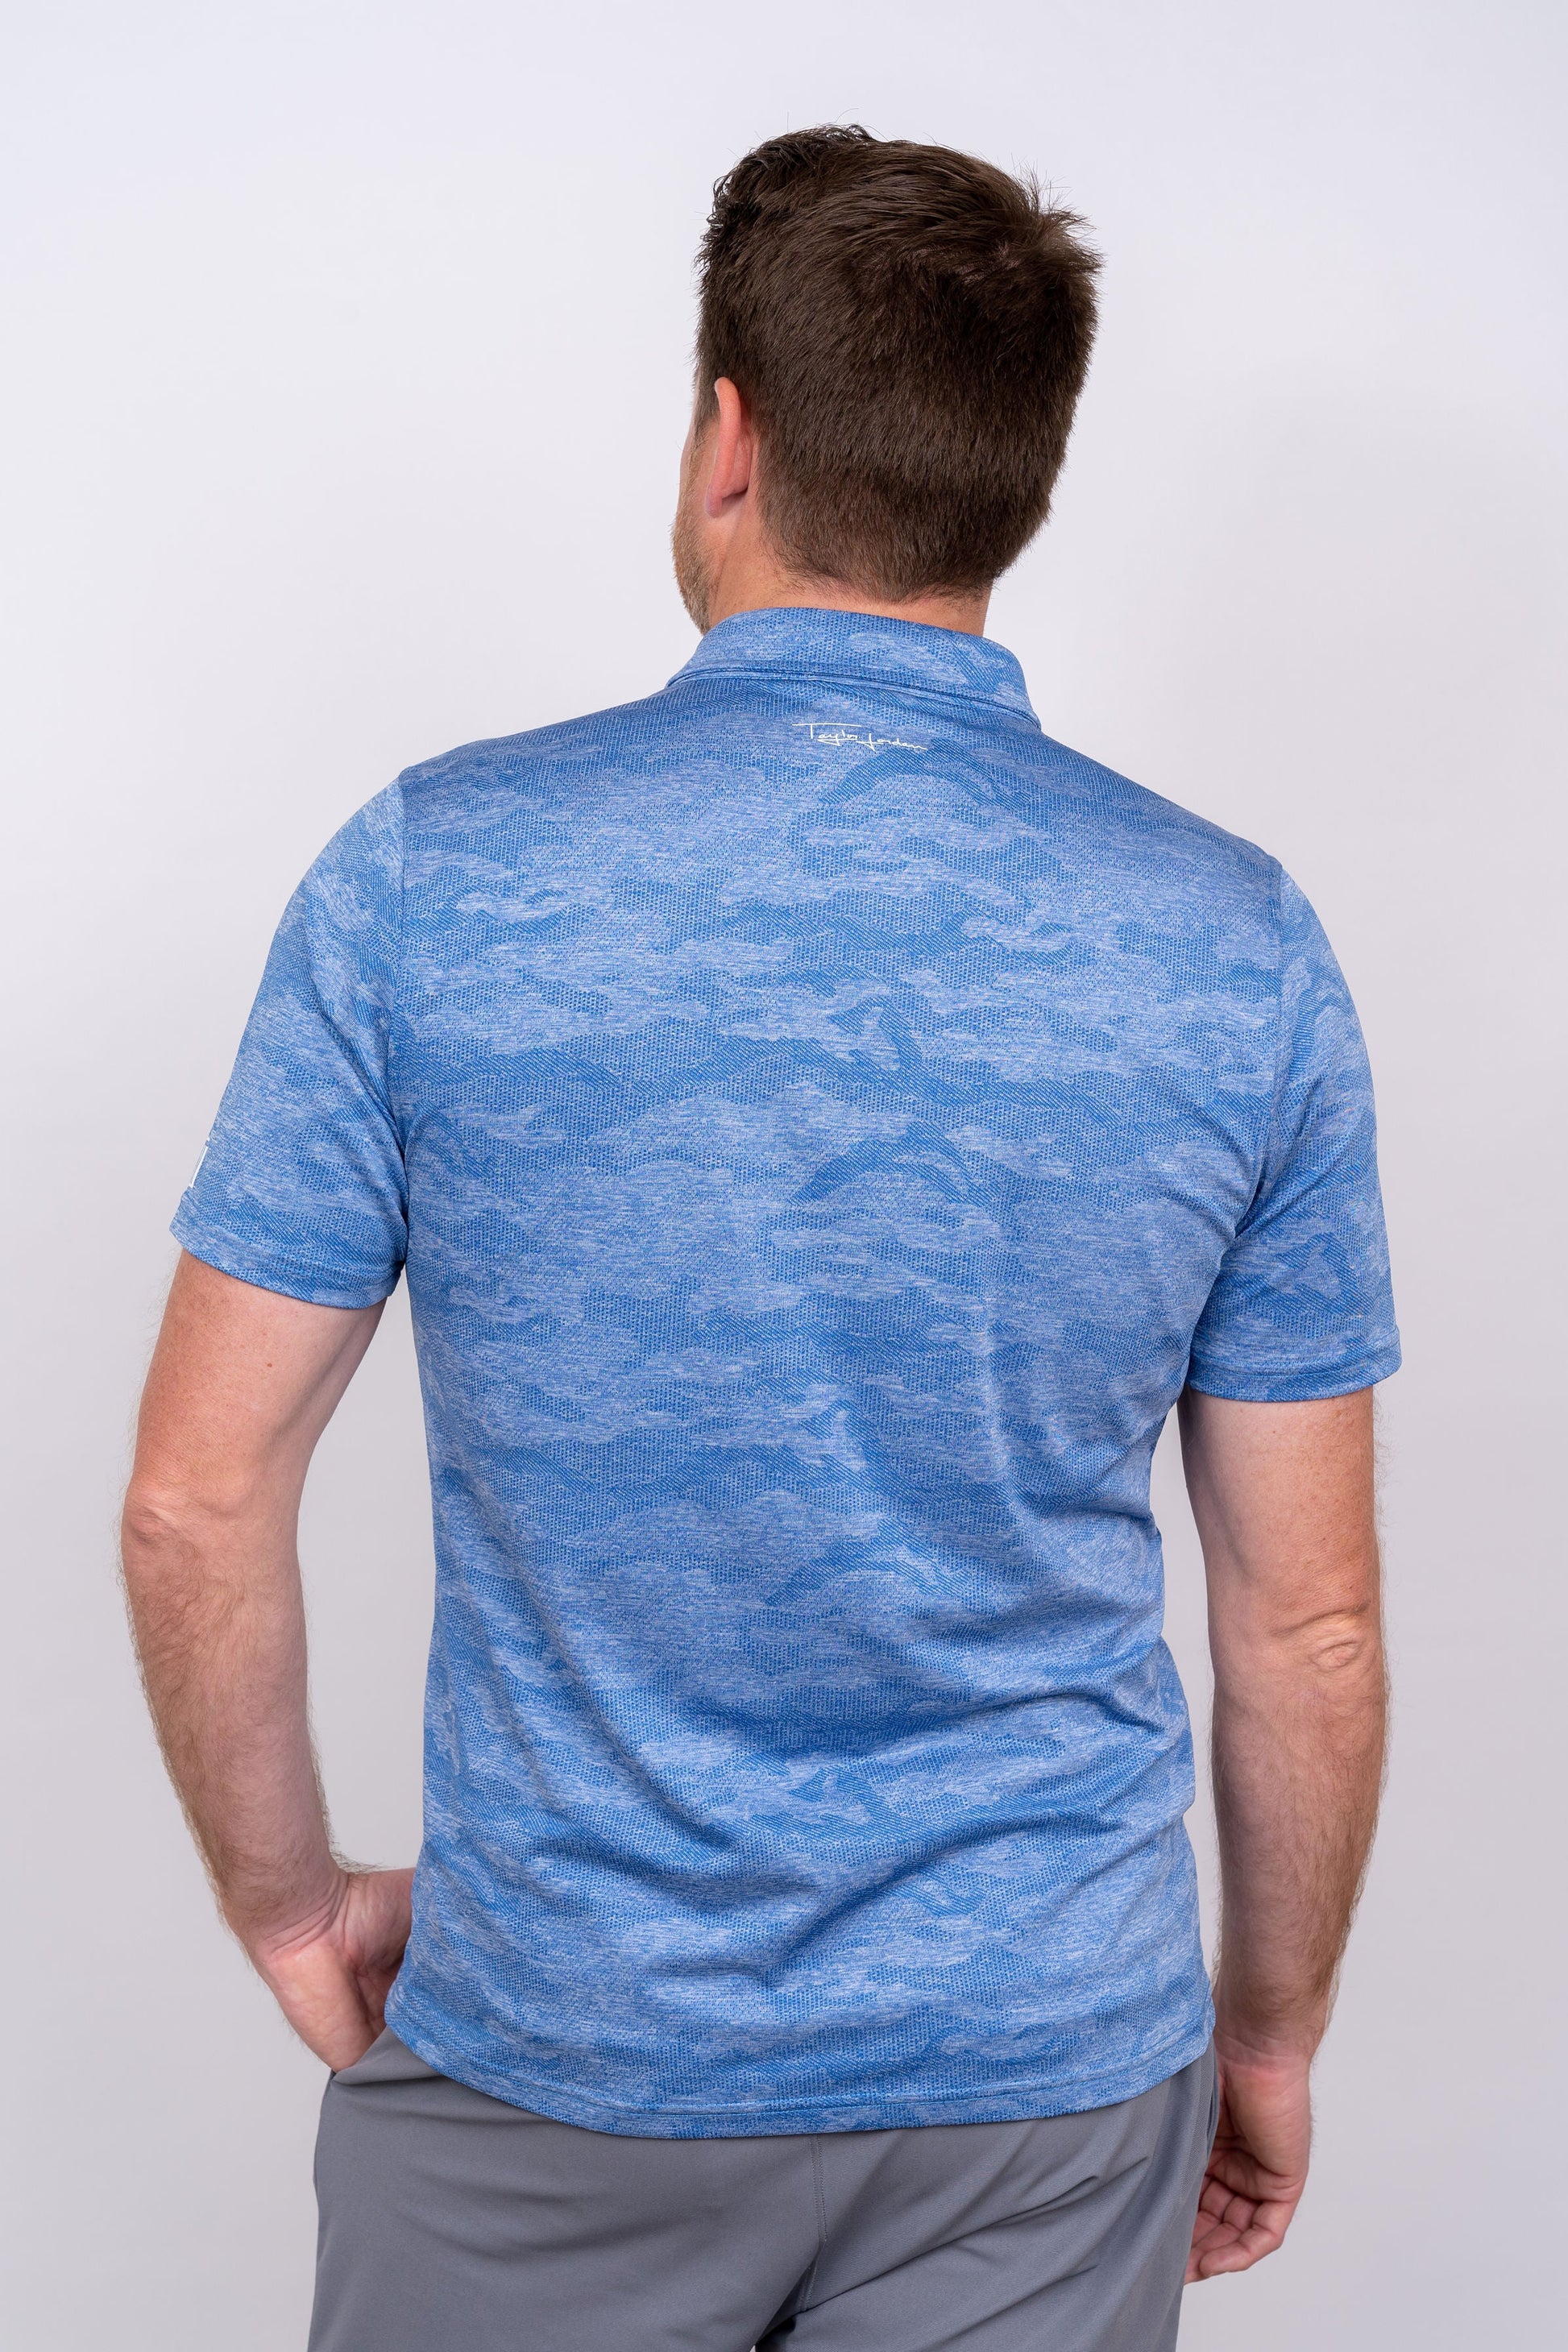 Ghost Camouflage - Royal Blue Men's Golf Shirt Taylor Jordan Apparel 